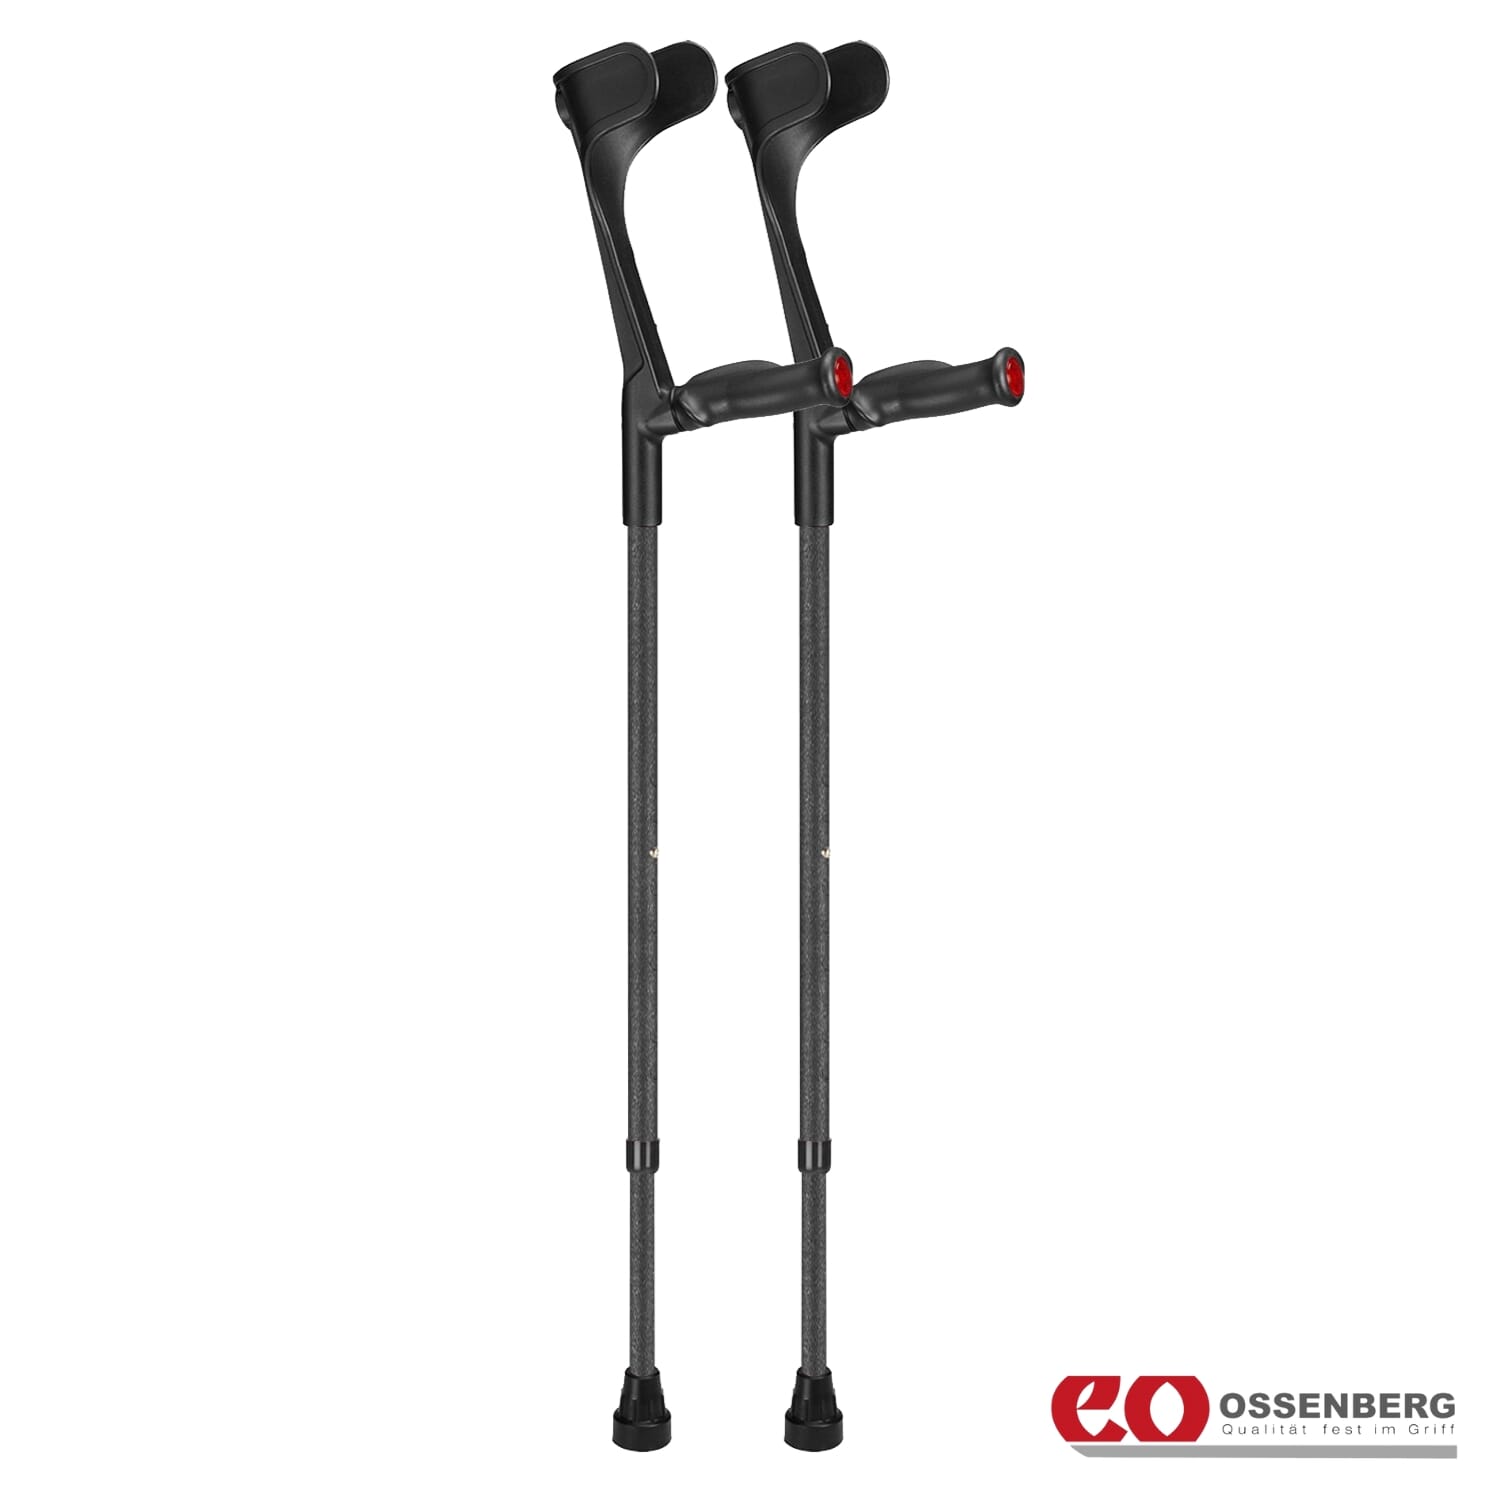 View Ossenberg Open Cuff Comfort Grip Crutches Black Pair information